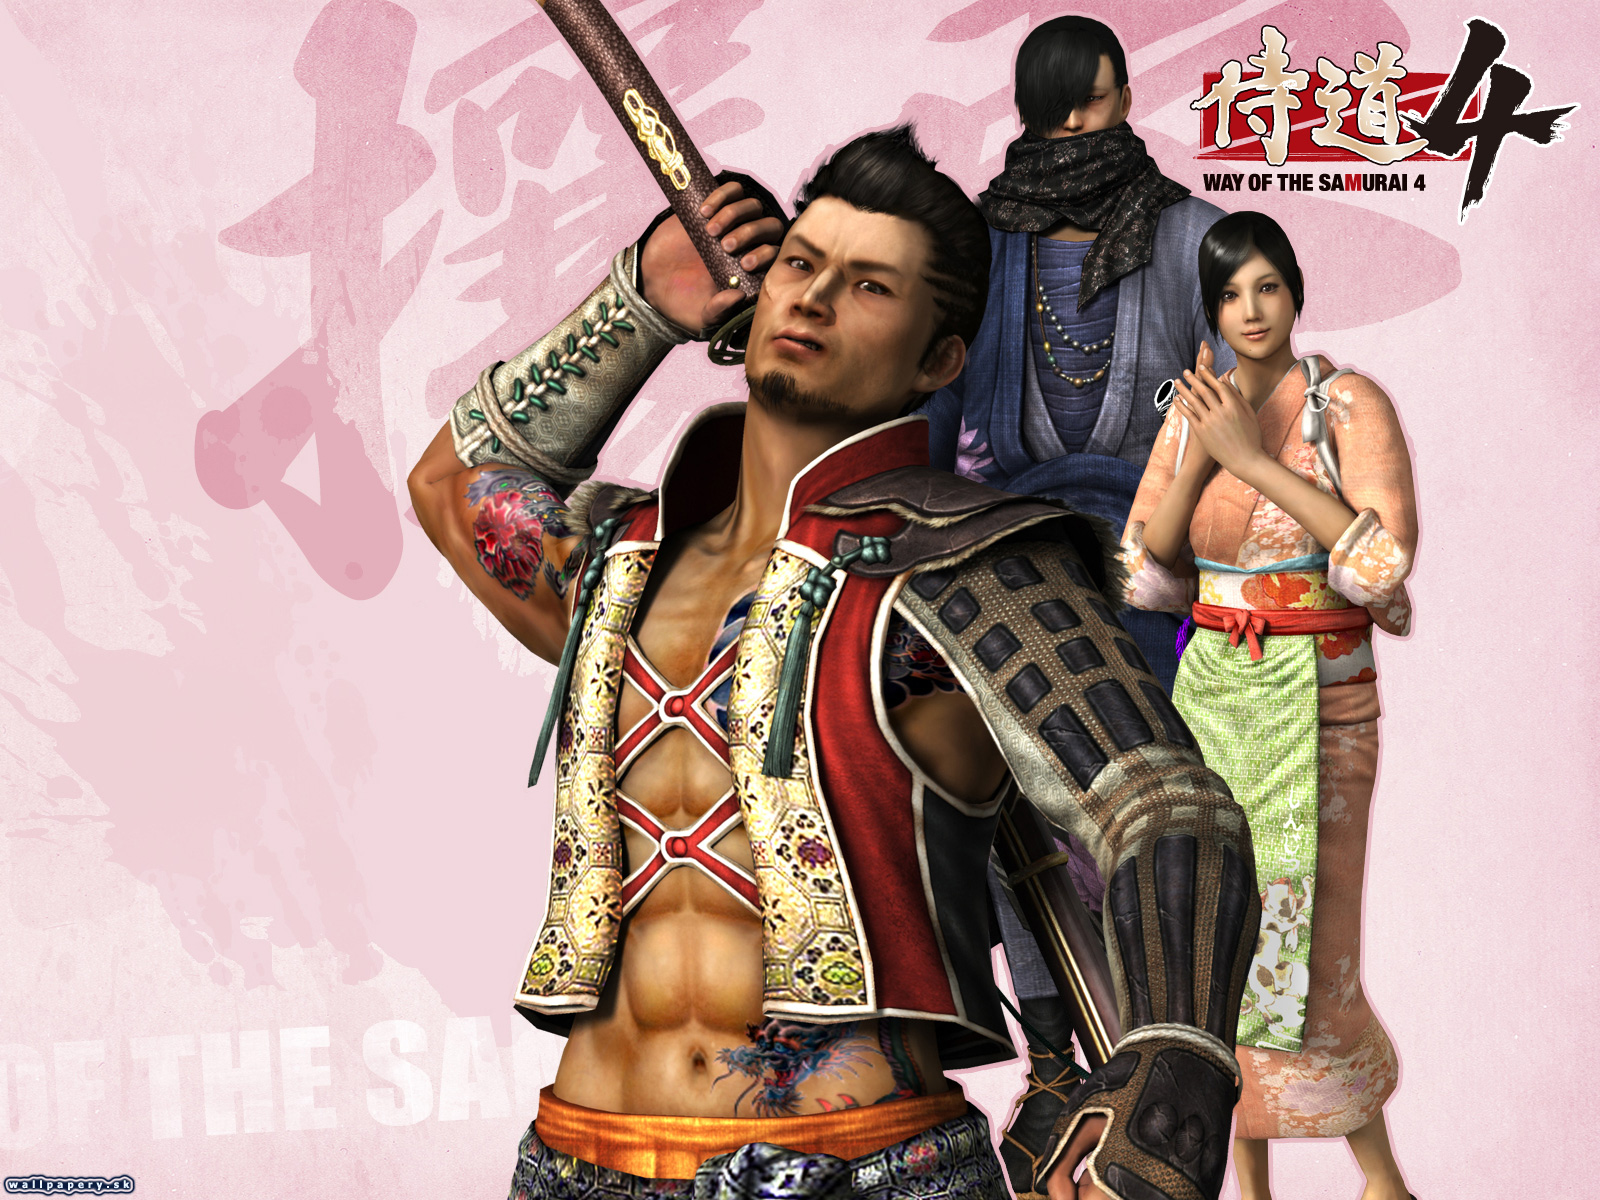 Way of the Samurai 4 - wallpaper 1